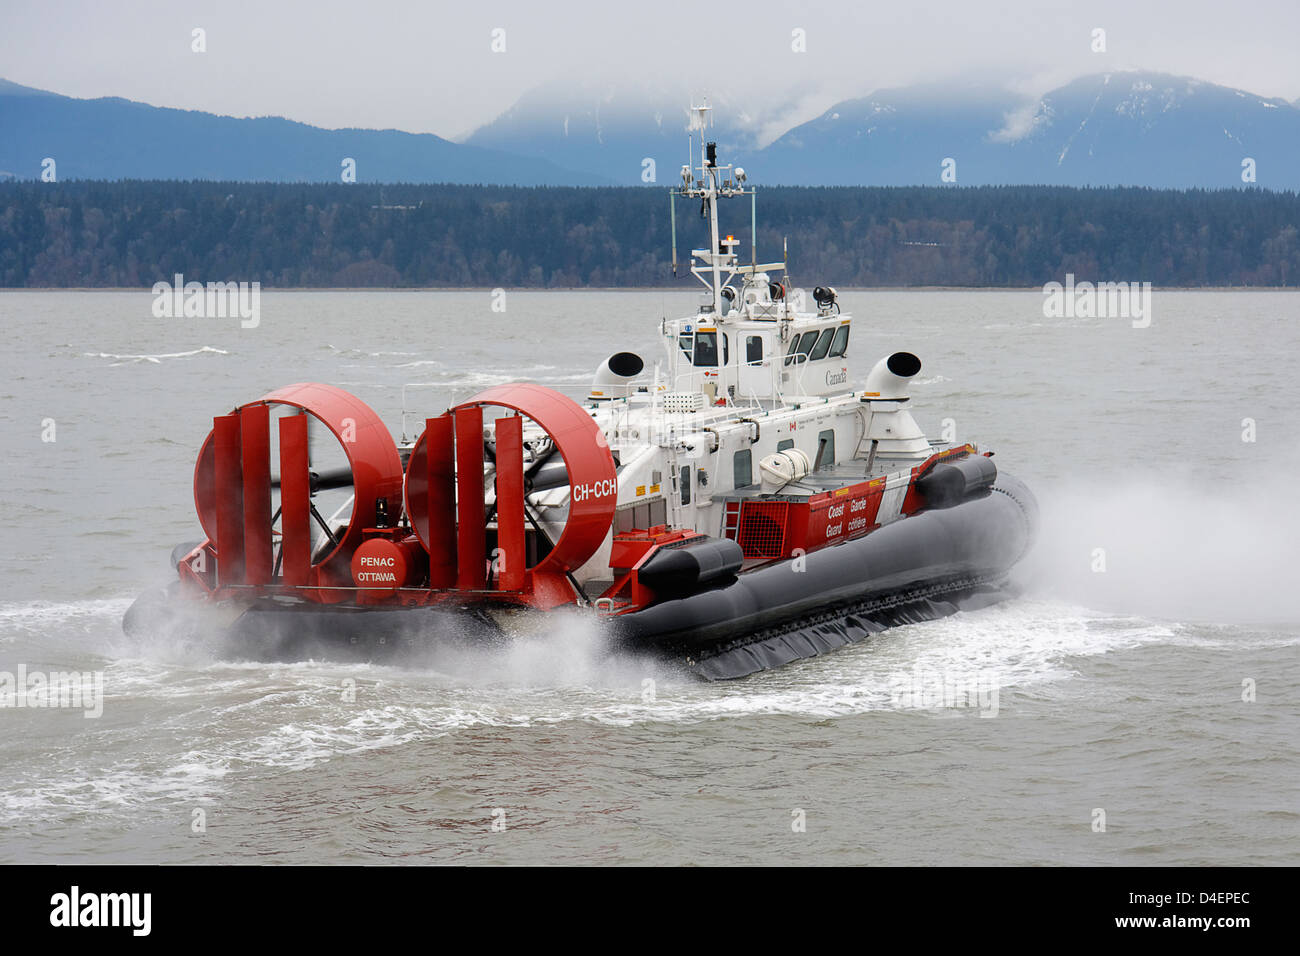 La Guardia Costiera canadese hovercraft Penac, Foto Stock